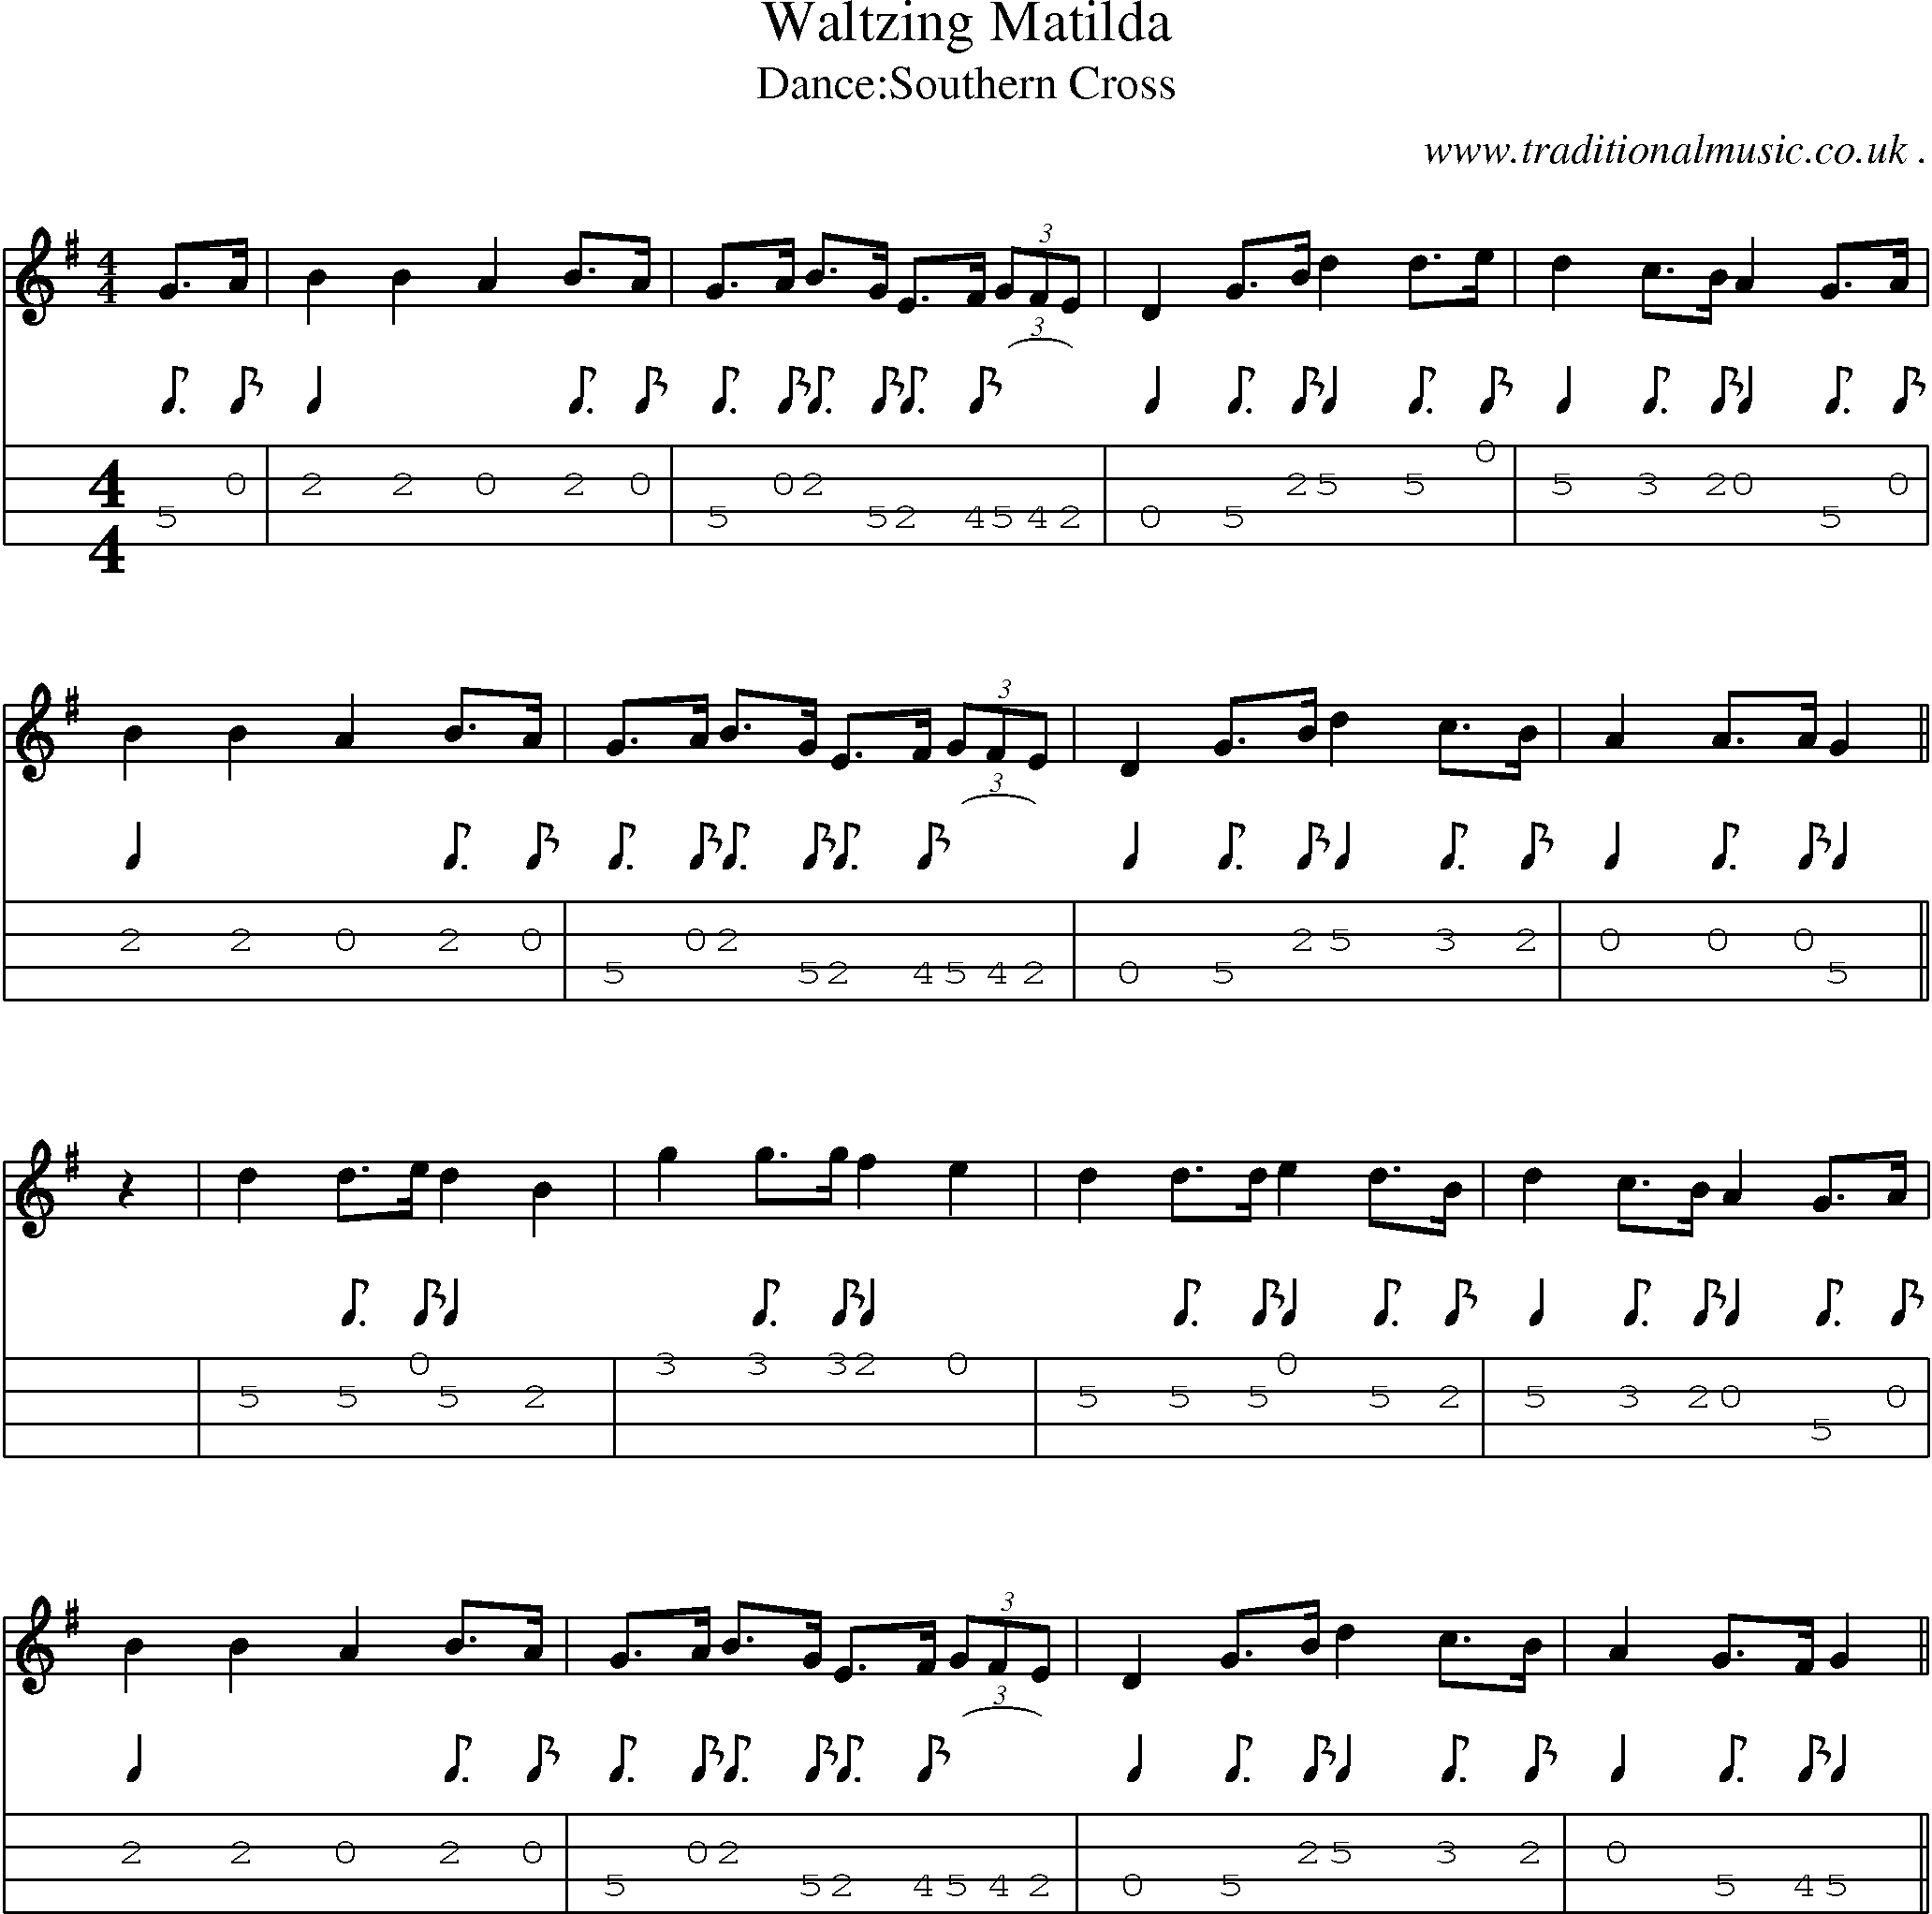 Sheet-Music and Mandolin Tabs for Waltzing Matilda